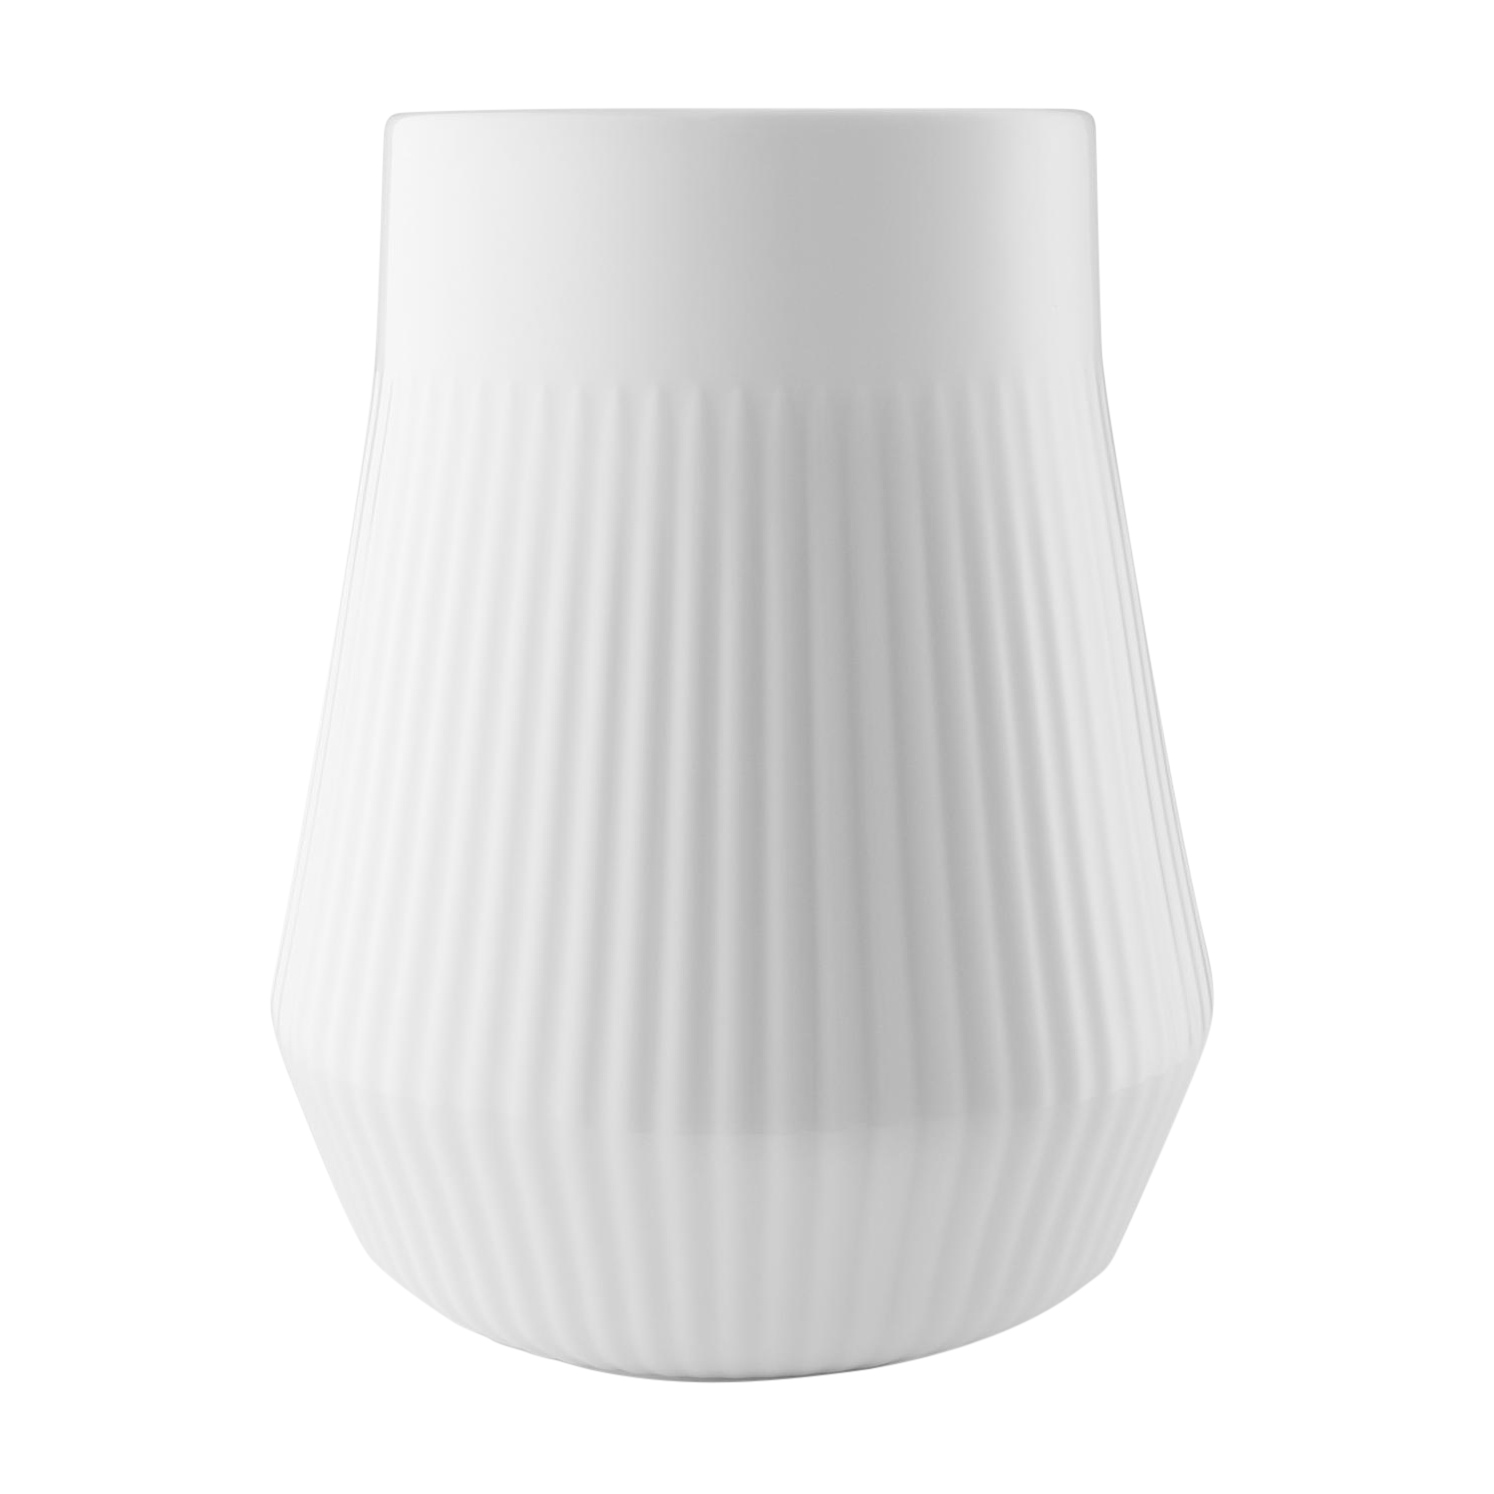 Eva Solo - Legio Nova Vase H 21,5cm - weiß/glänzend/LxBxH 16,5x16,5x21,5cm von Eva Solo